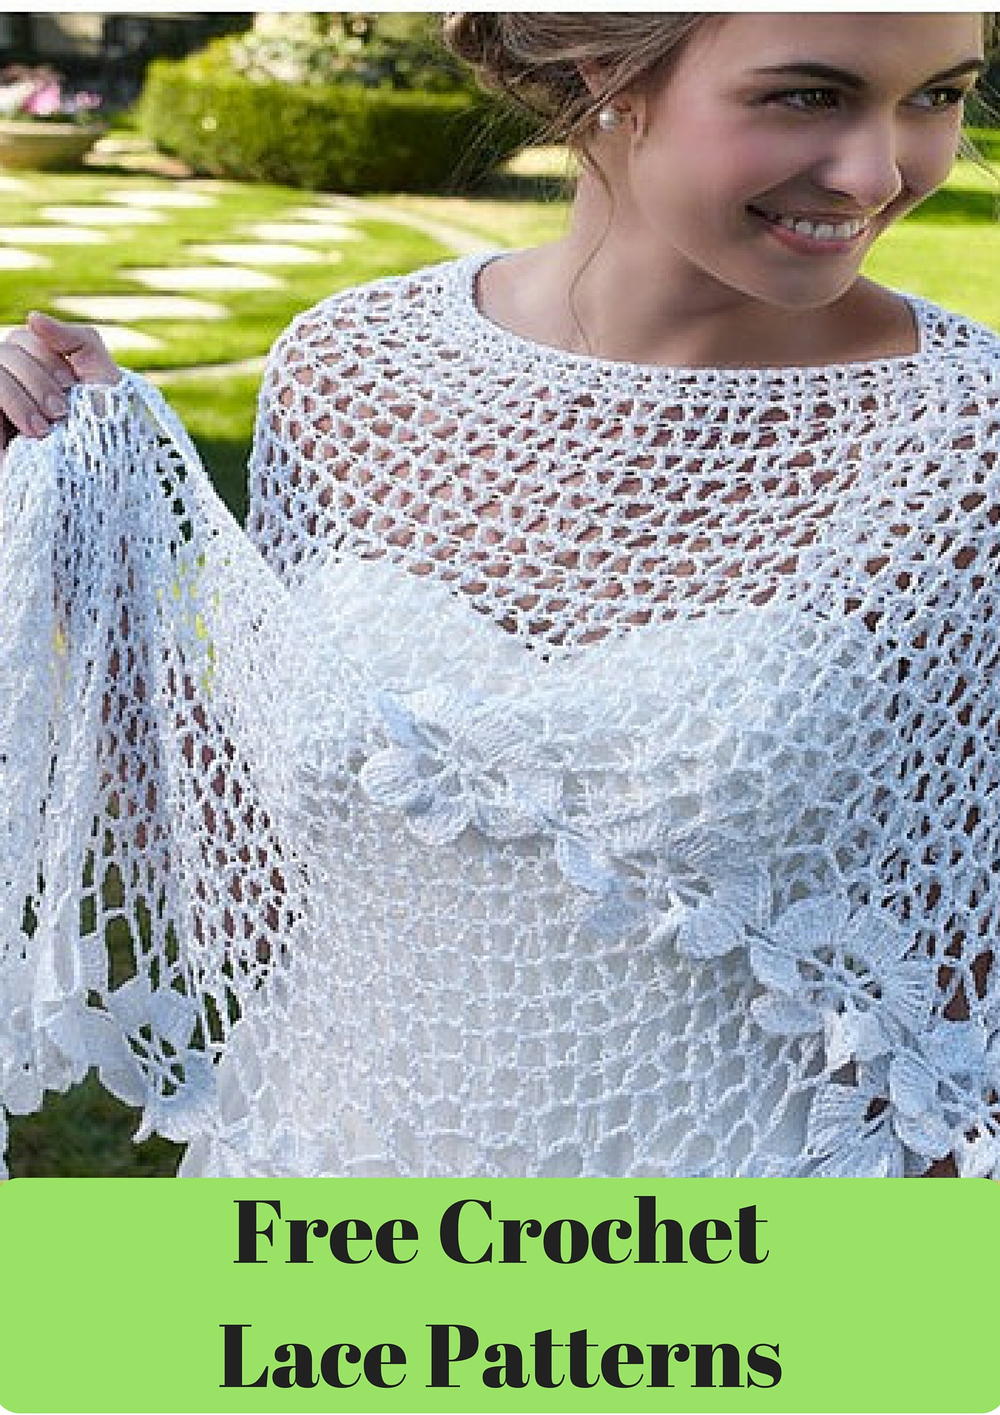 30 Free Crochet Lace Patterns | AllFreeCrochet.com